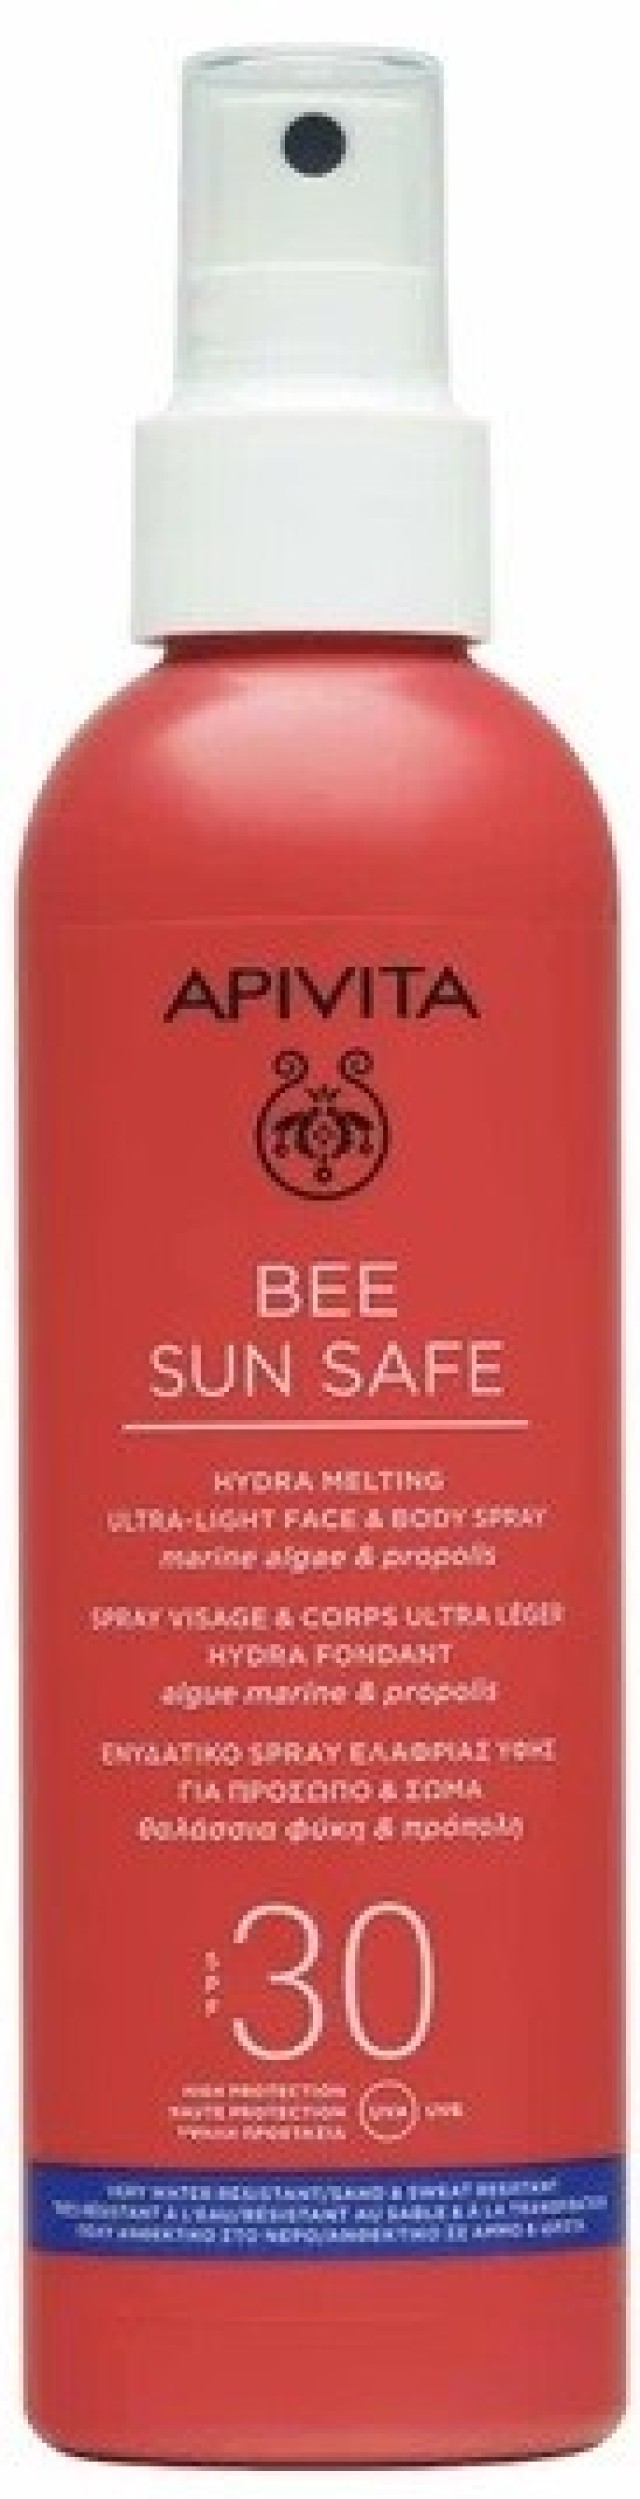 Apivita Bee Sun Safe Ultra Light Face & Body Spray Ενυδατικό Spray Ελαφριάς Υφής για Πρόσωπο & Σώμα spf30 200ml